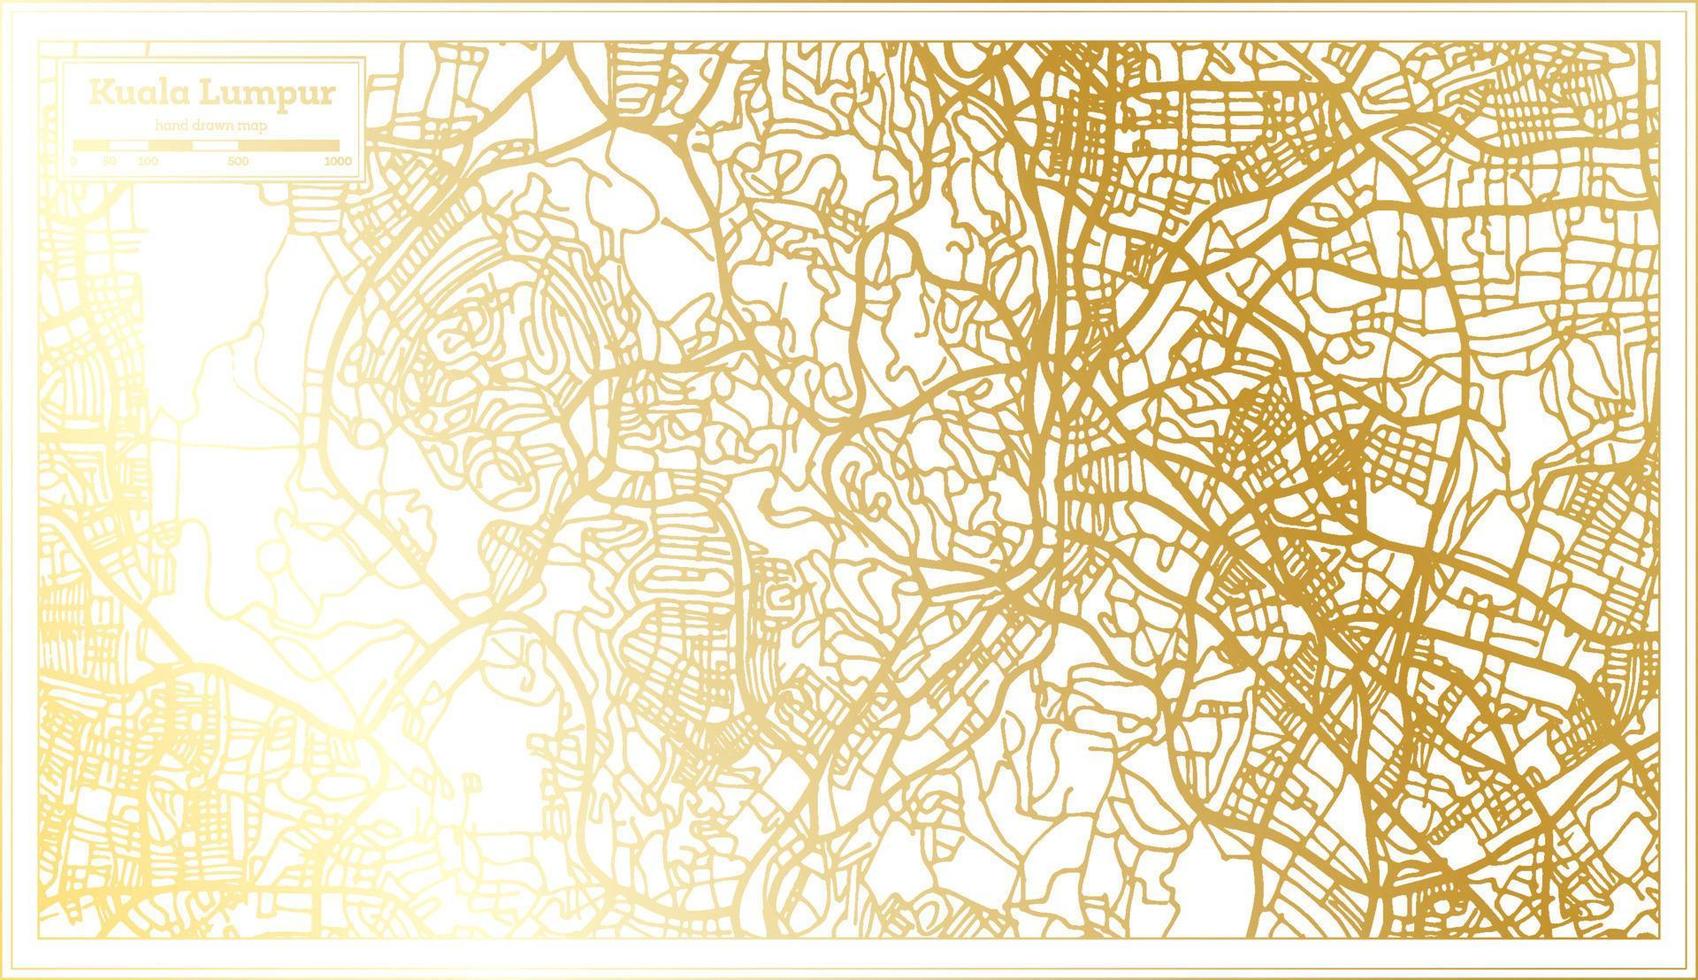 Kuala lumpur Maleisië stad kaart in retro stijl in gouden kleur. schets kaart. vector